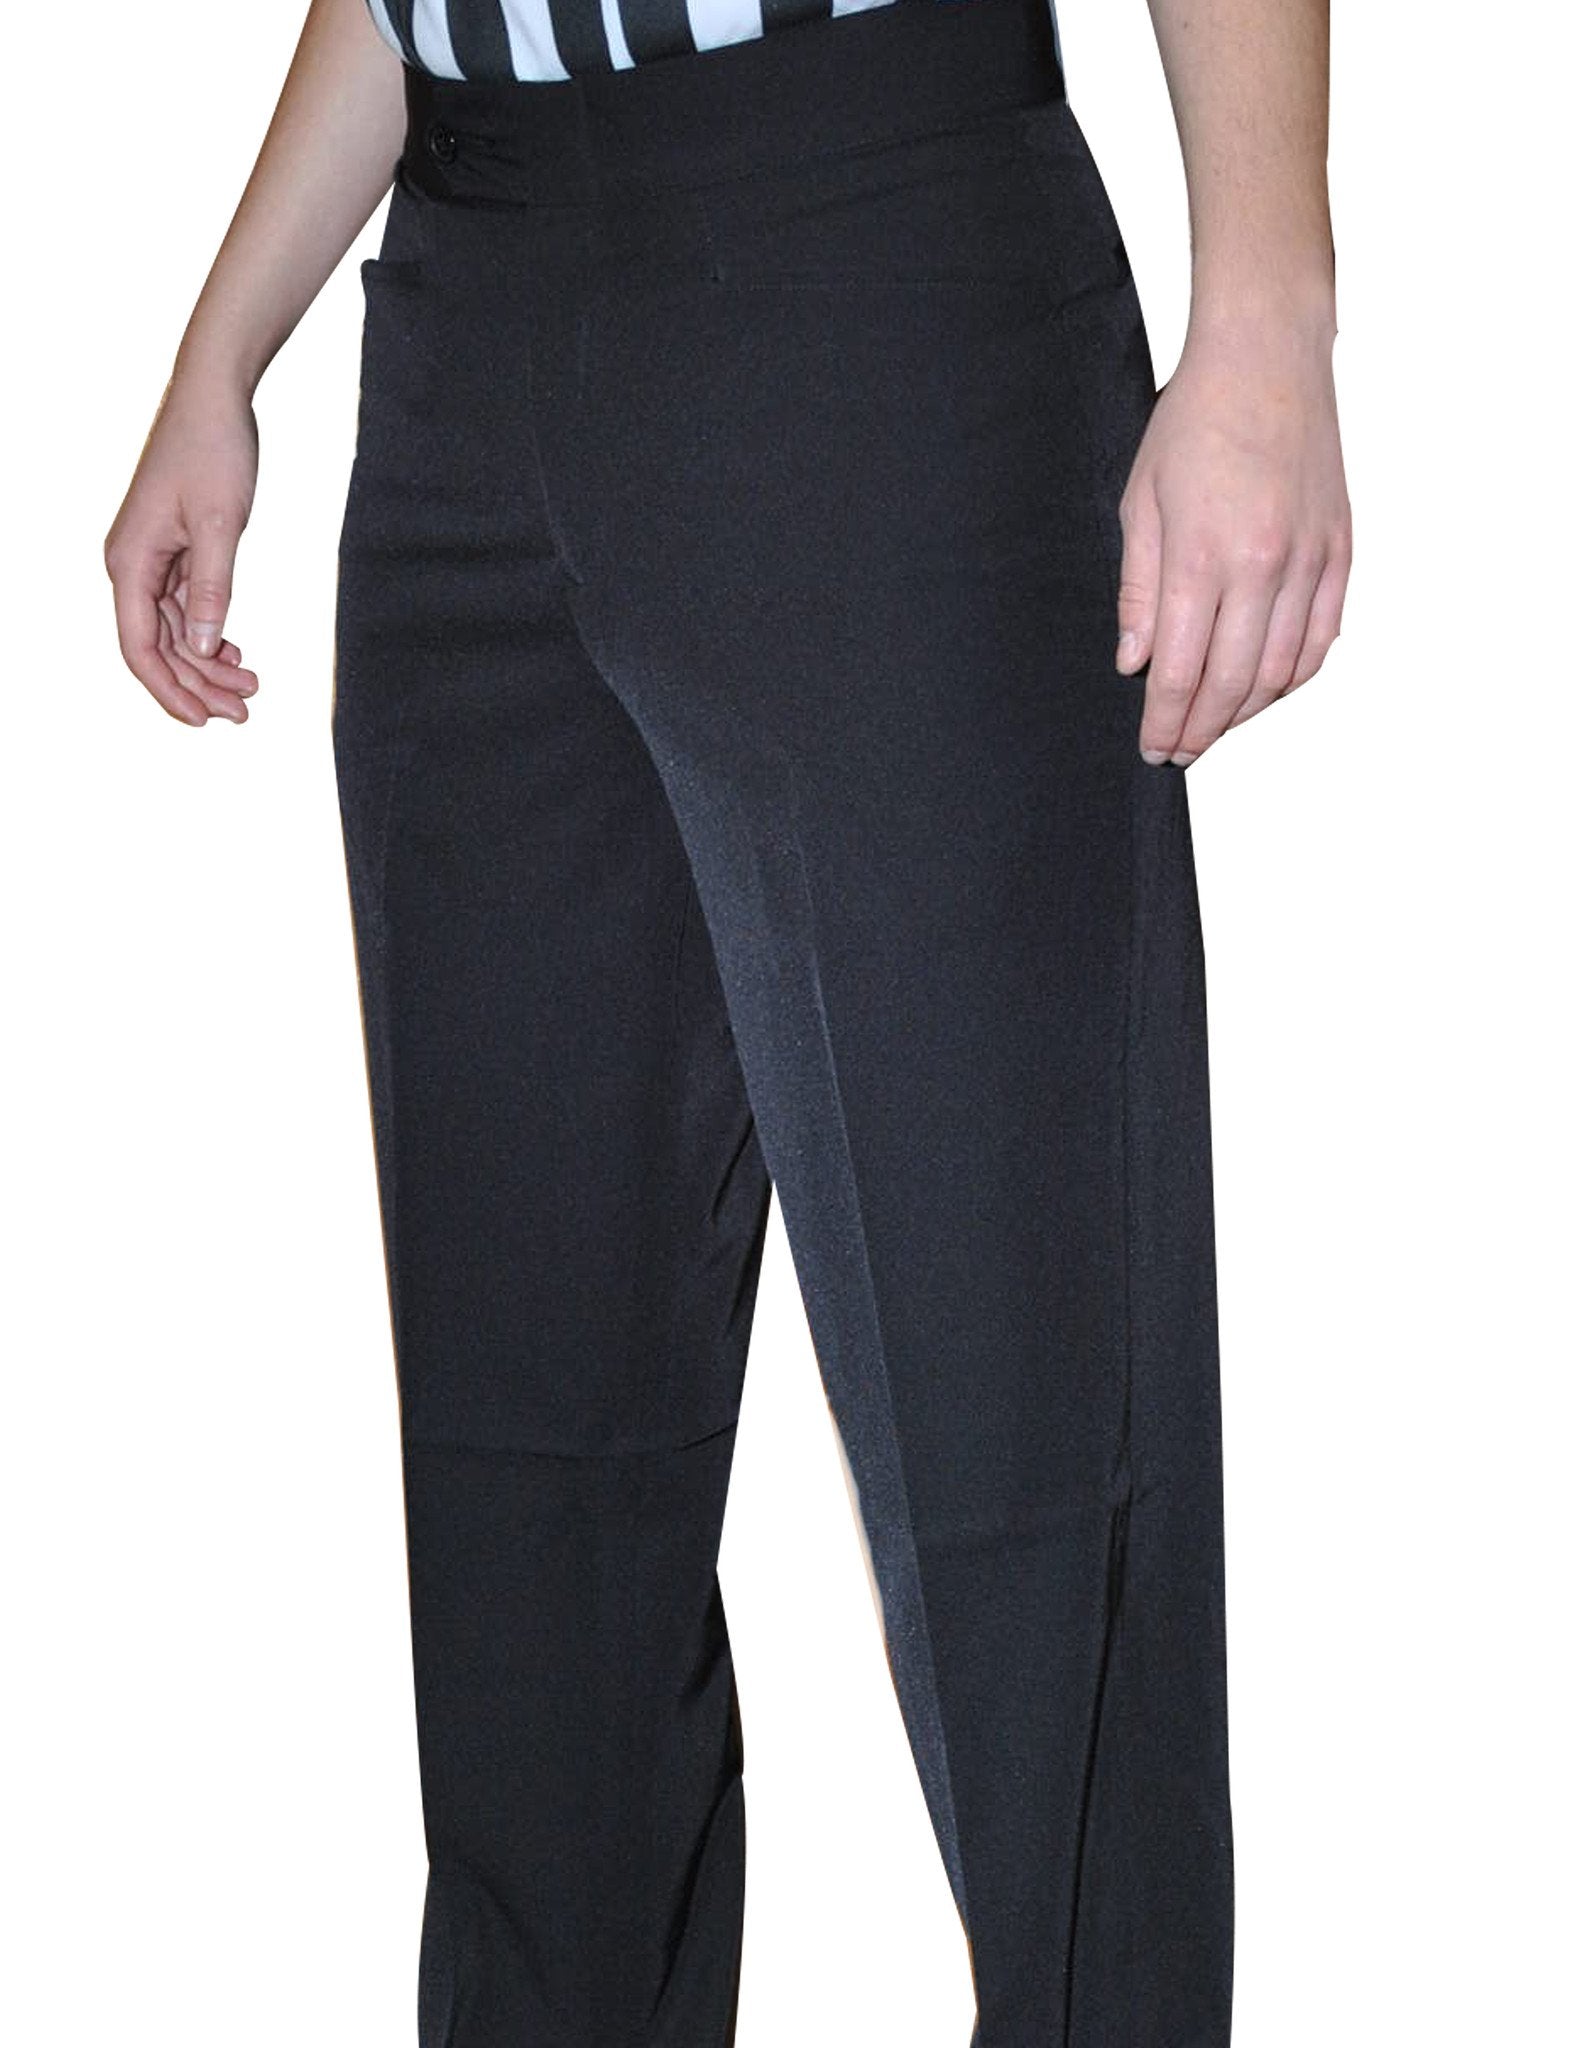 BKS282-Smitty Women's 4-Way Stretch Flat Front Pants w/ Western Cut Pockets